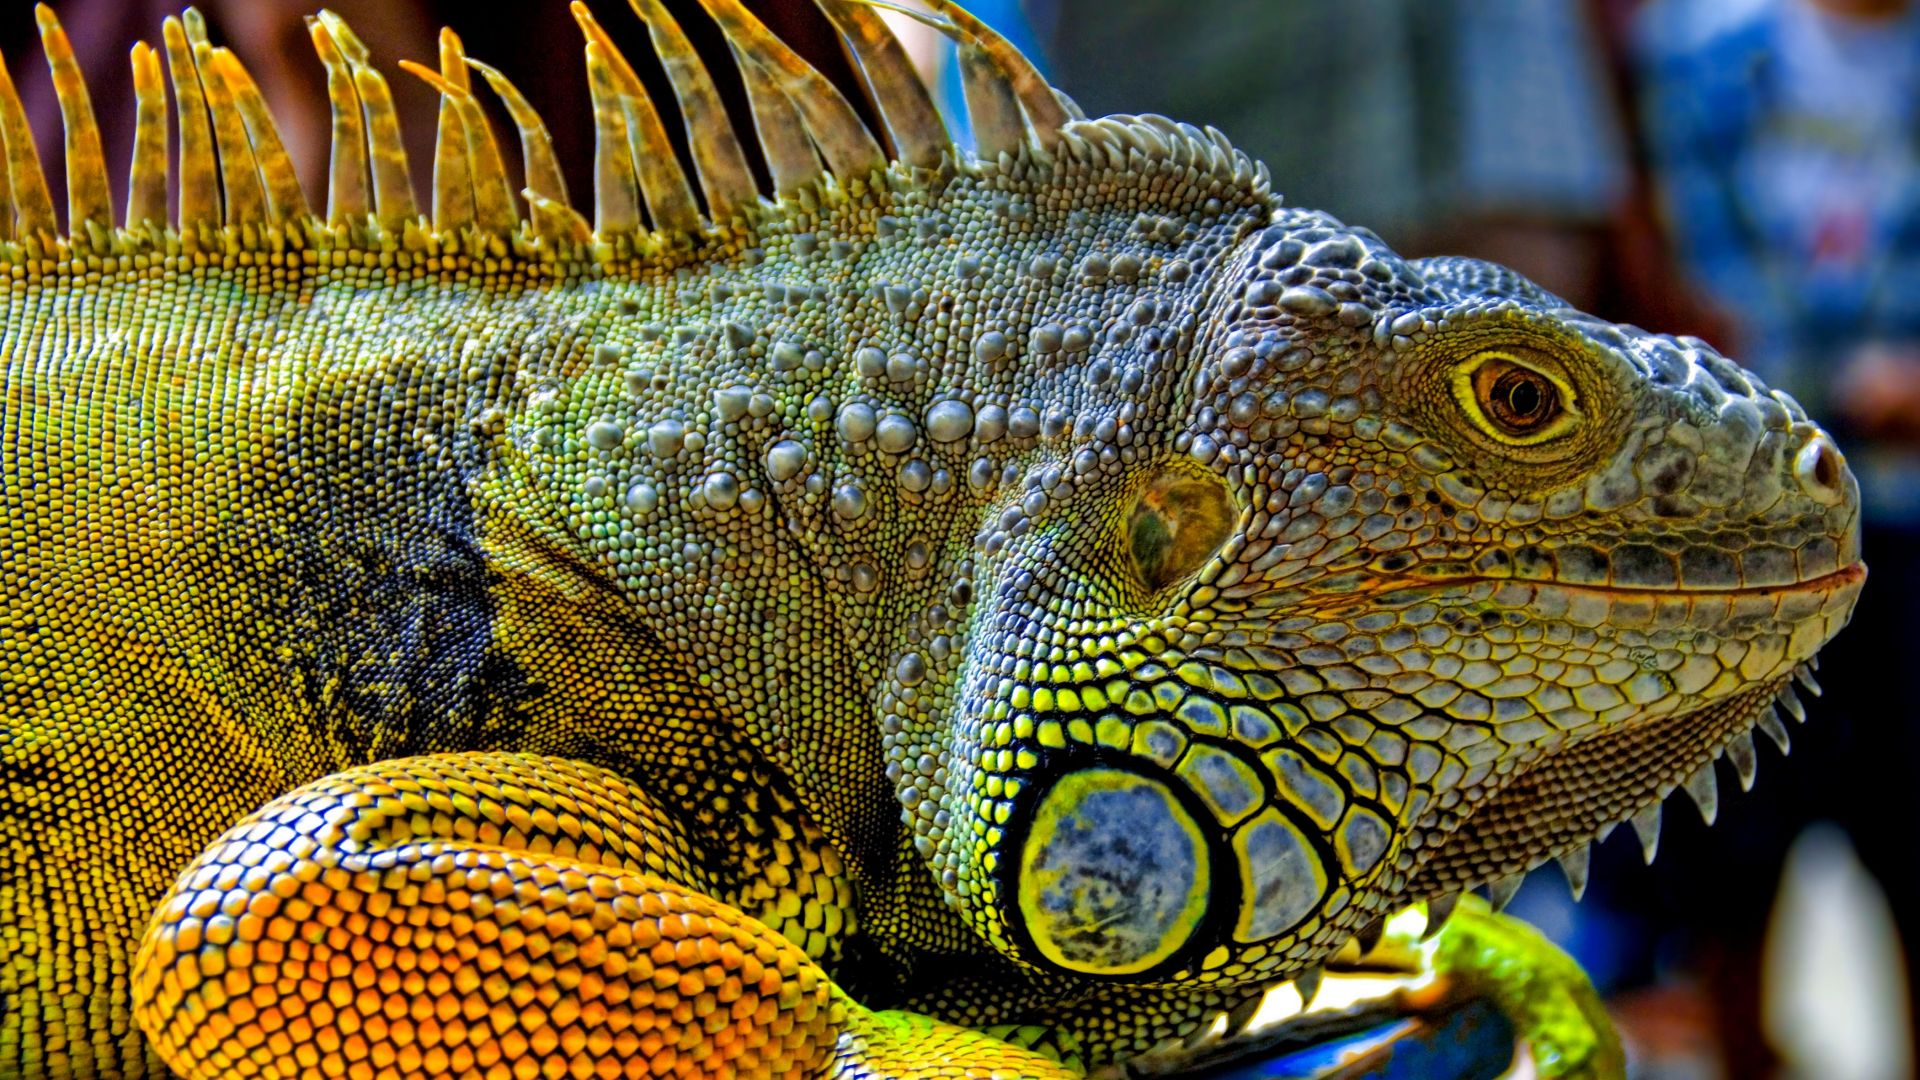 Green Iguana, reptiles, nature, lizard (horizontal)